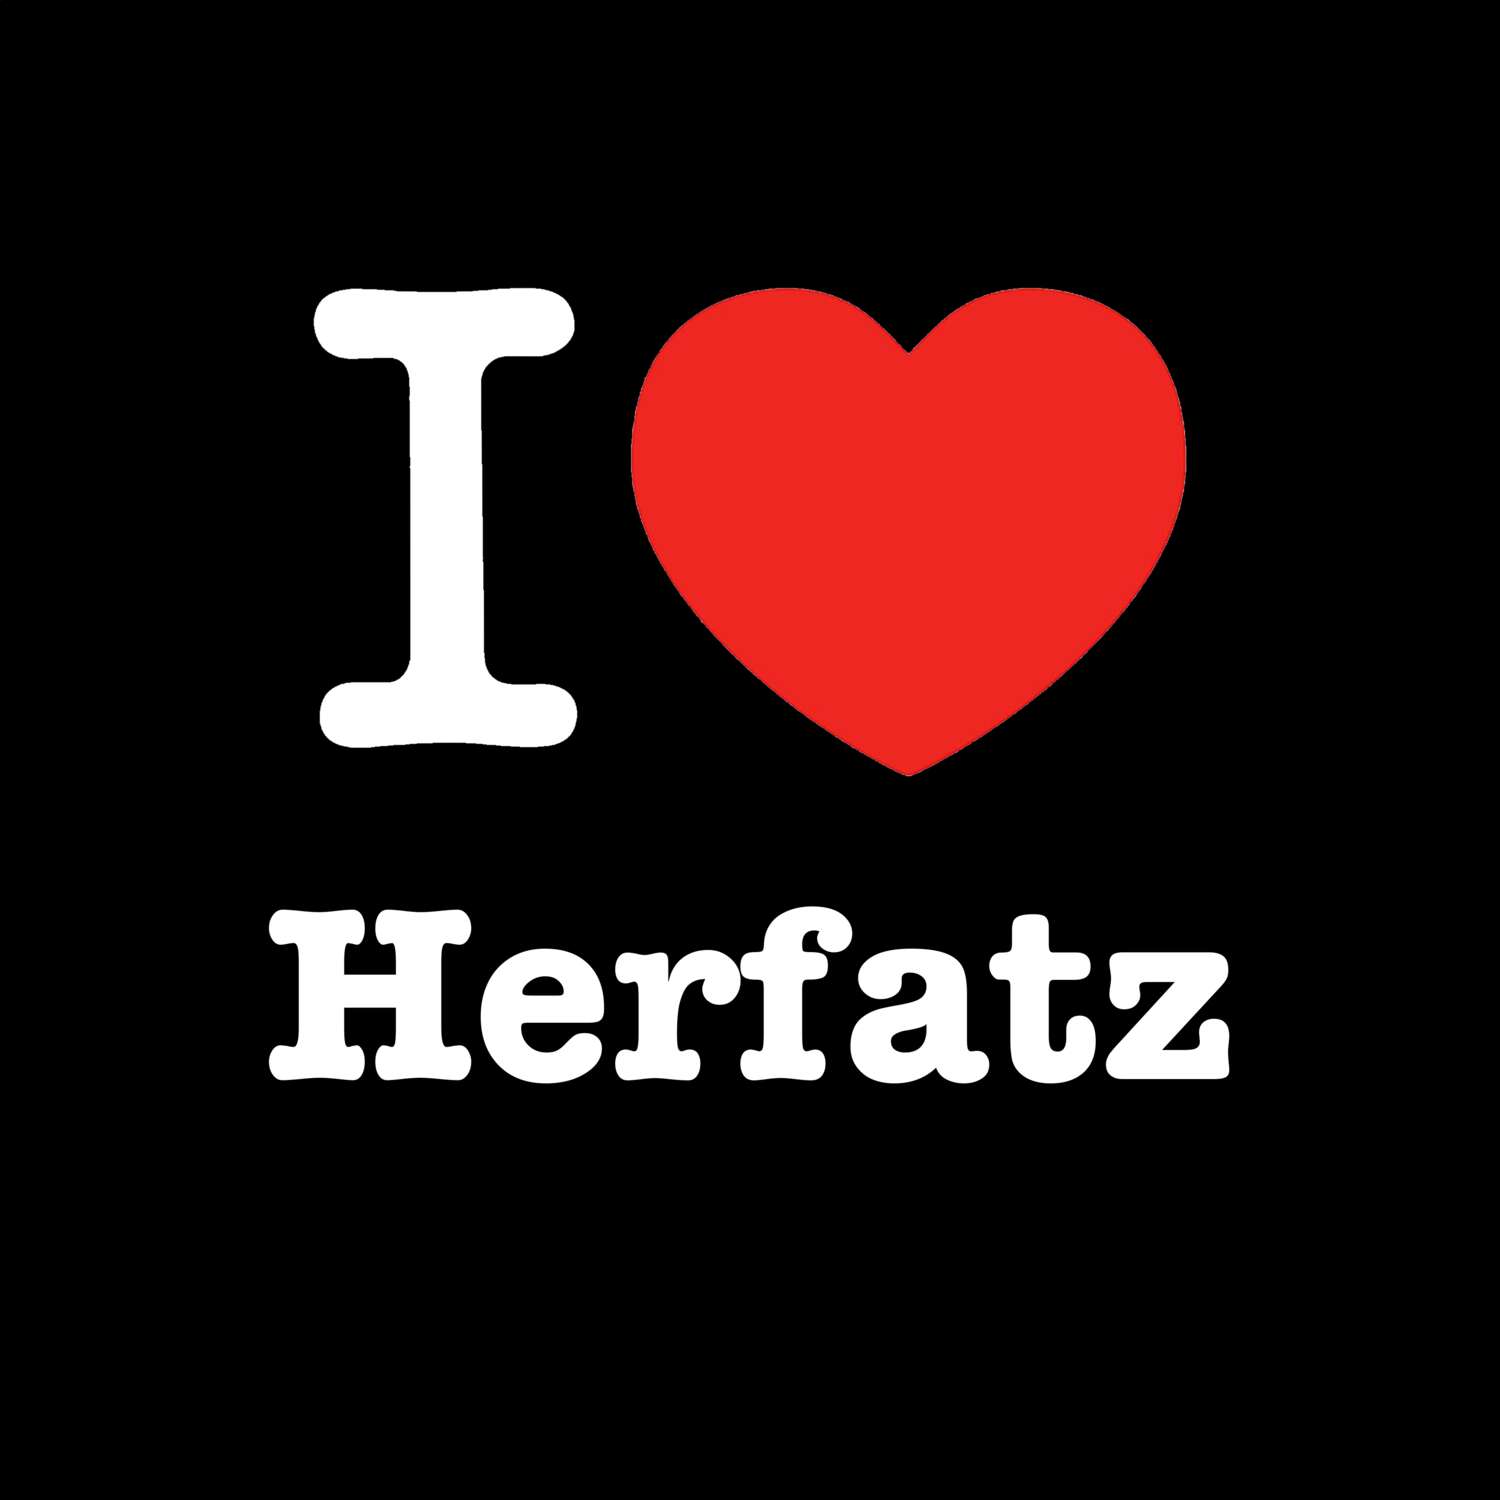 Herfatz T-Shirt »I love«